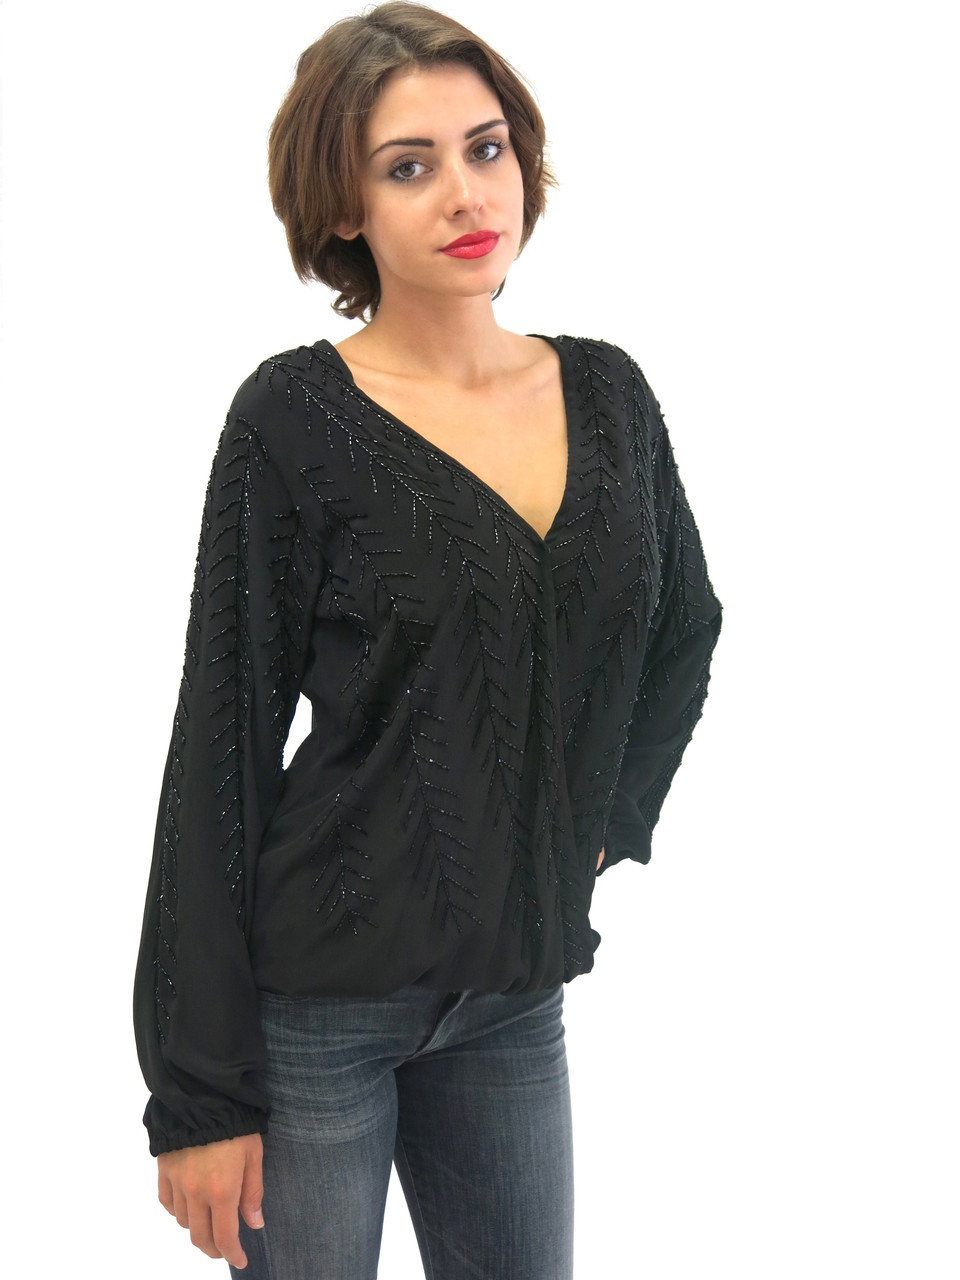 Karina Grimaldi Themis Silk Beaded Top Black | Shop Boutique Flirt